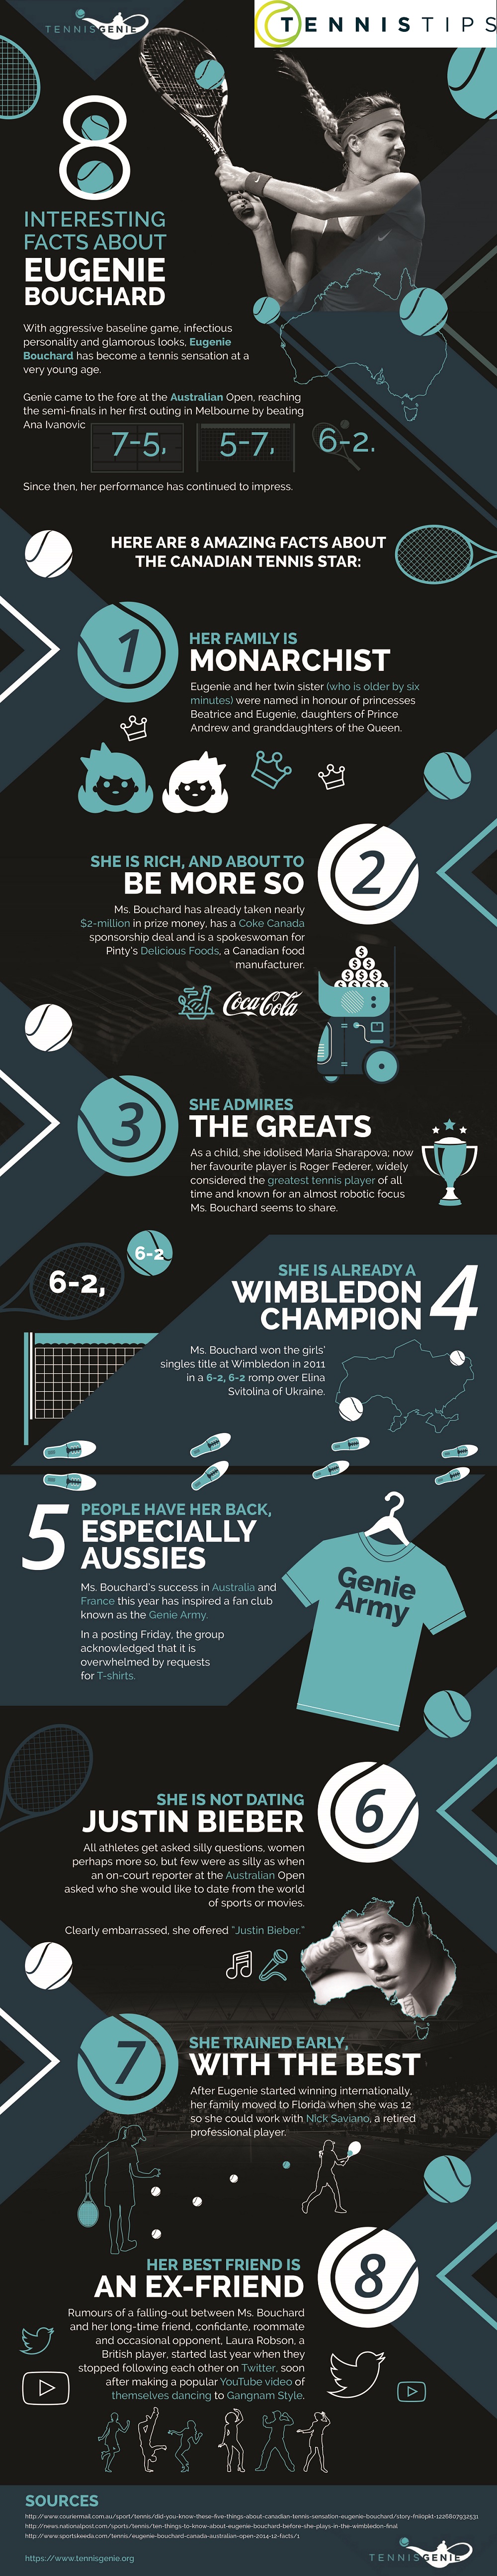 Eugenie Bouchard | Story so far Infographic | Tennis Tips UK